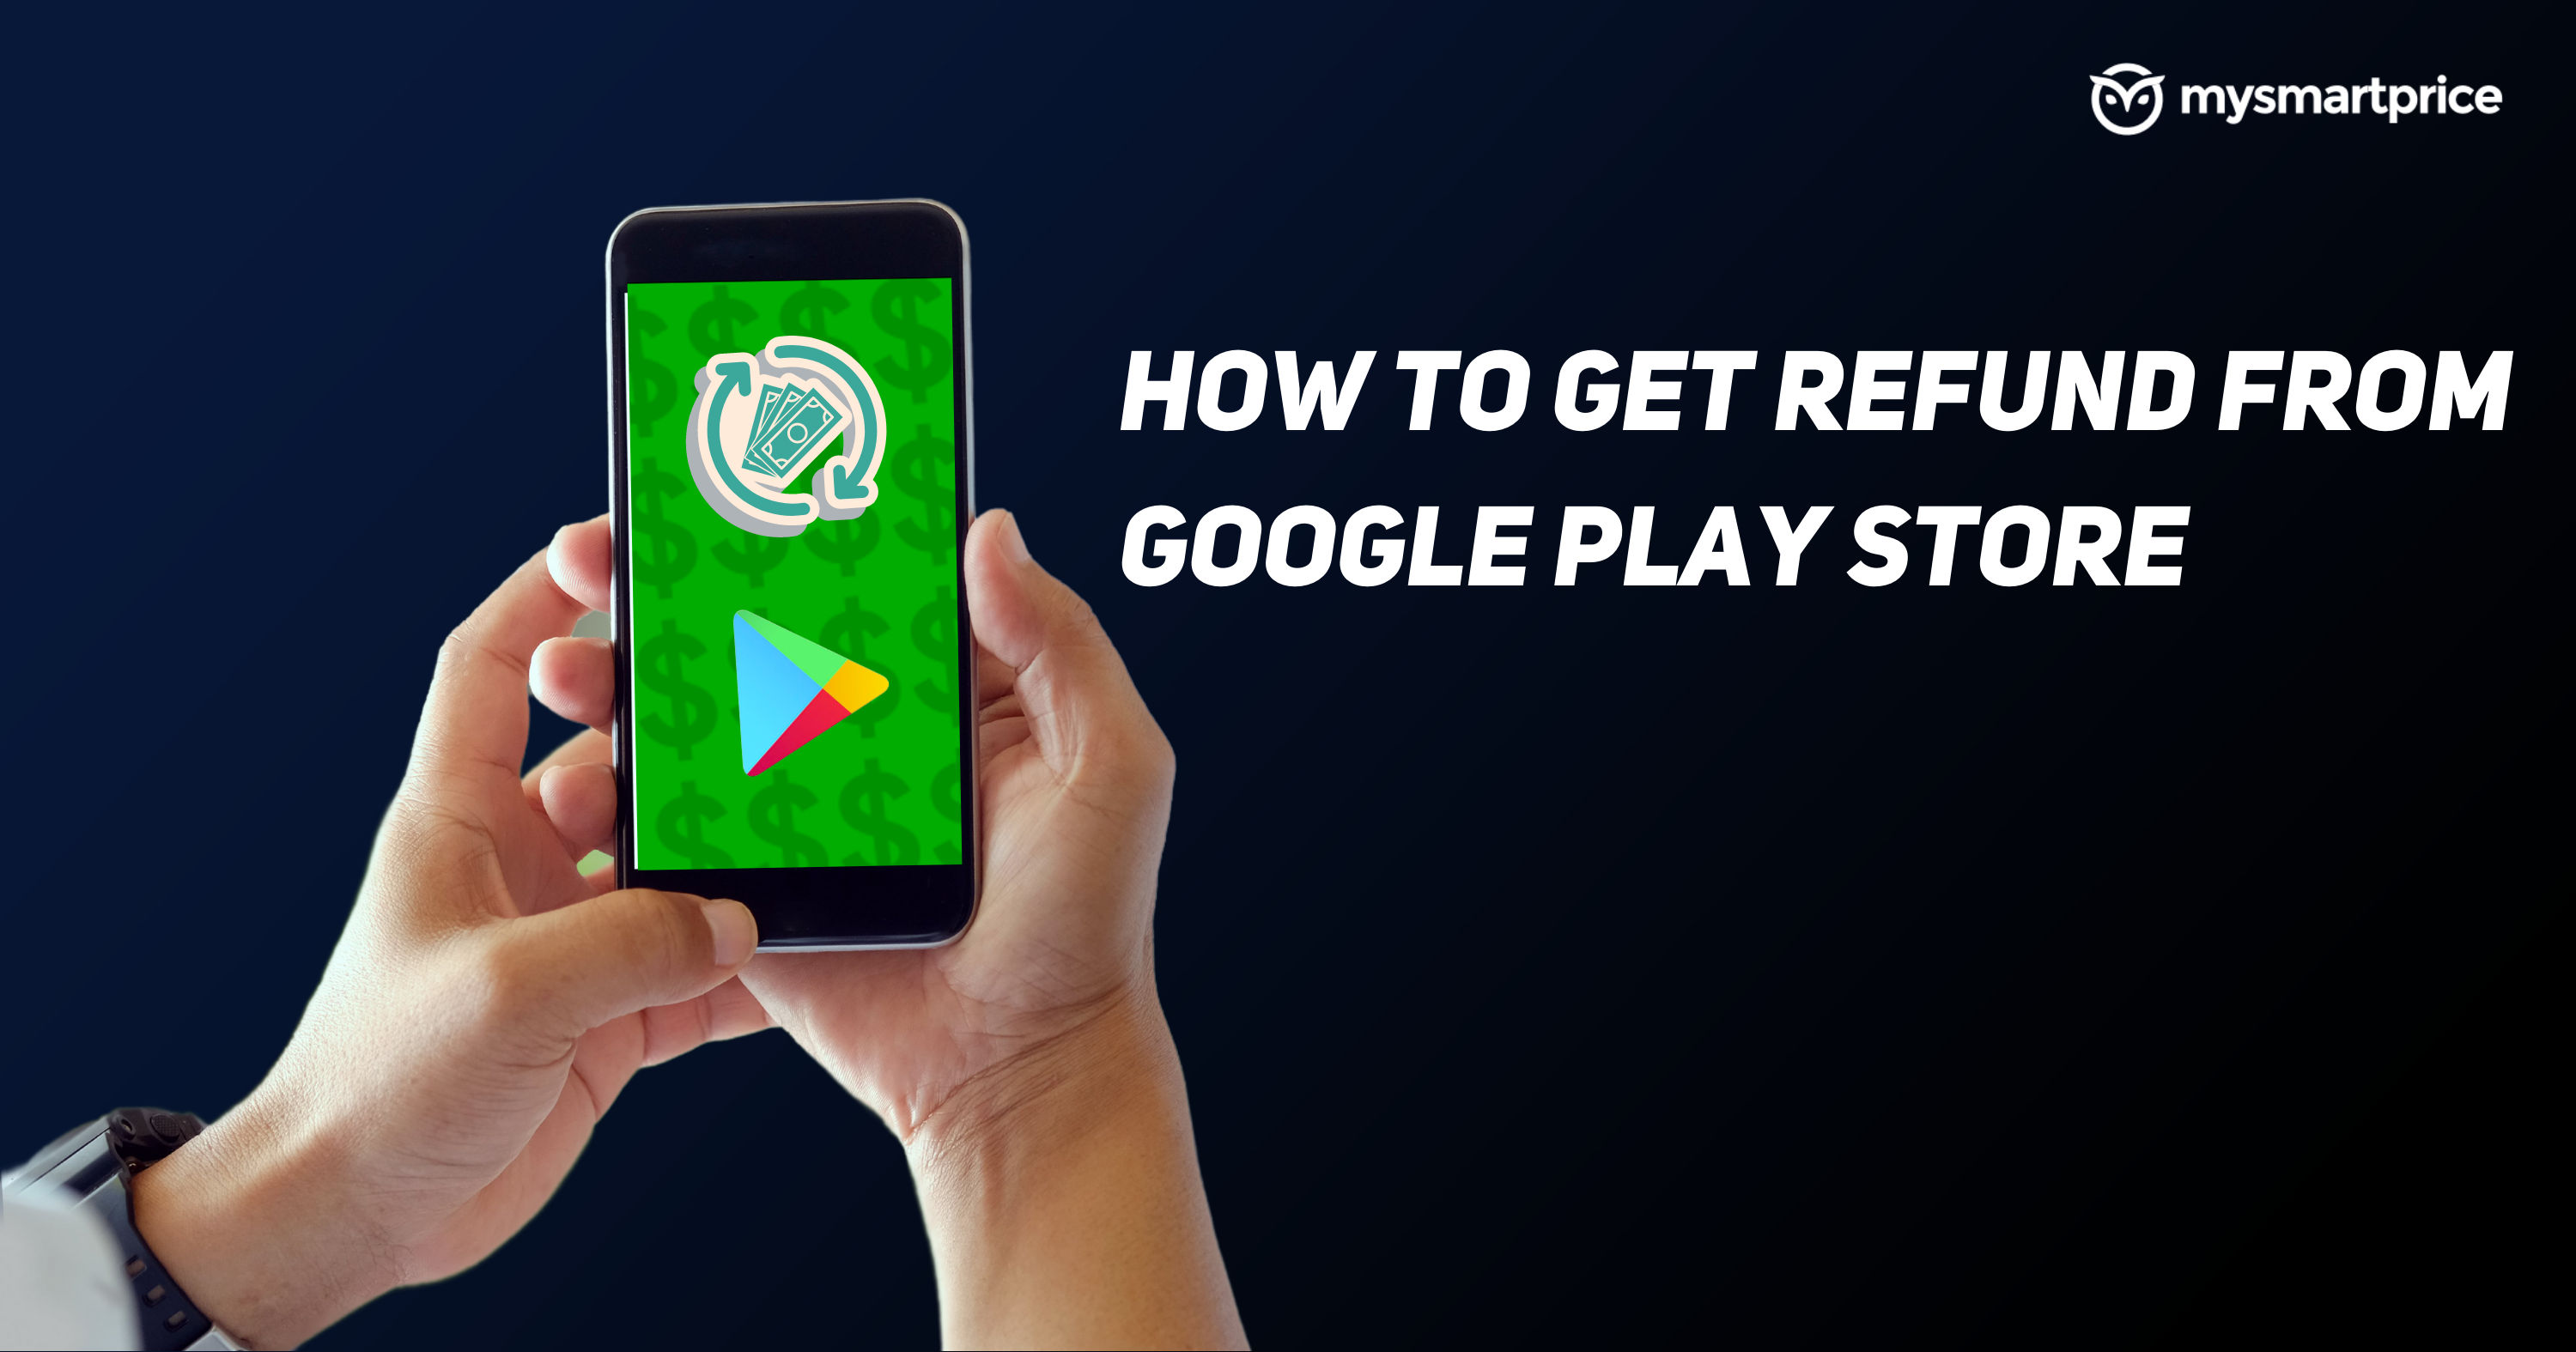 aa - Apps on Google Play